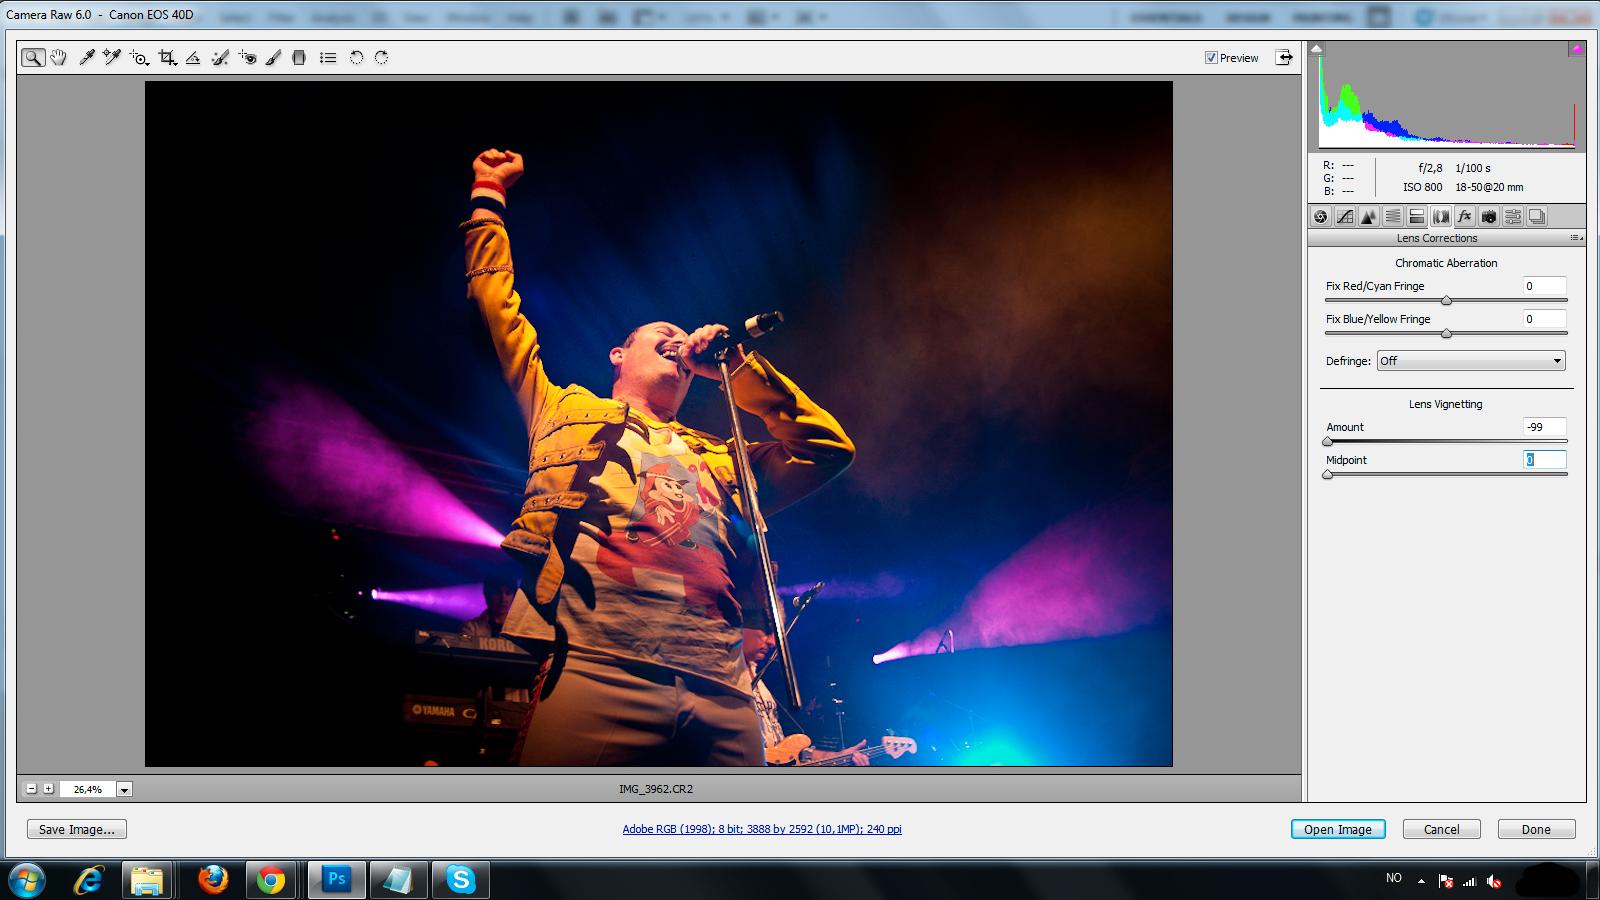 Slik kan det se ut når man jobber med RAW i Photoshop CS5.Foto: Screenshot/Hanna Magnussen Krogvold